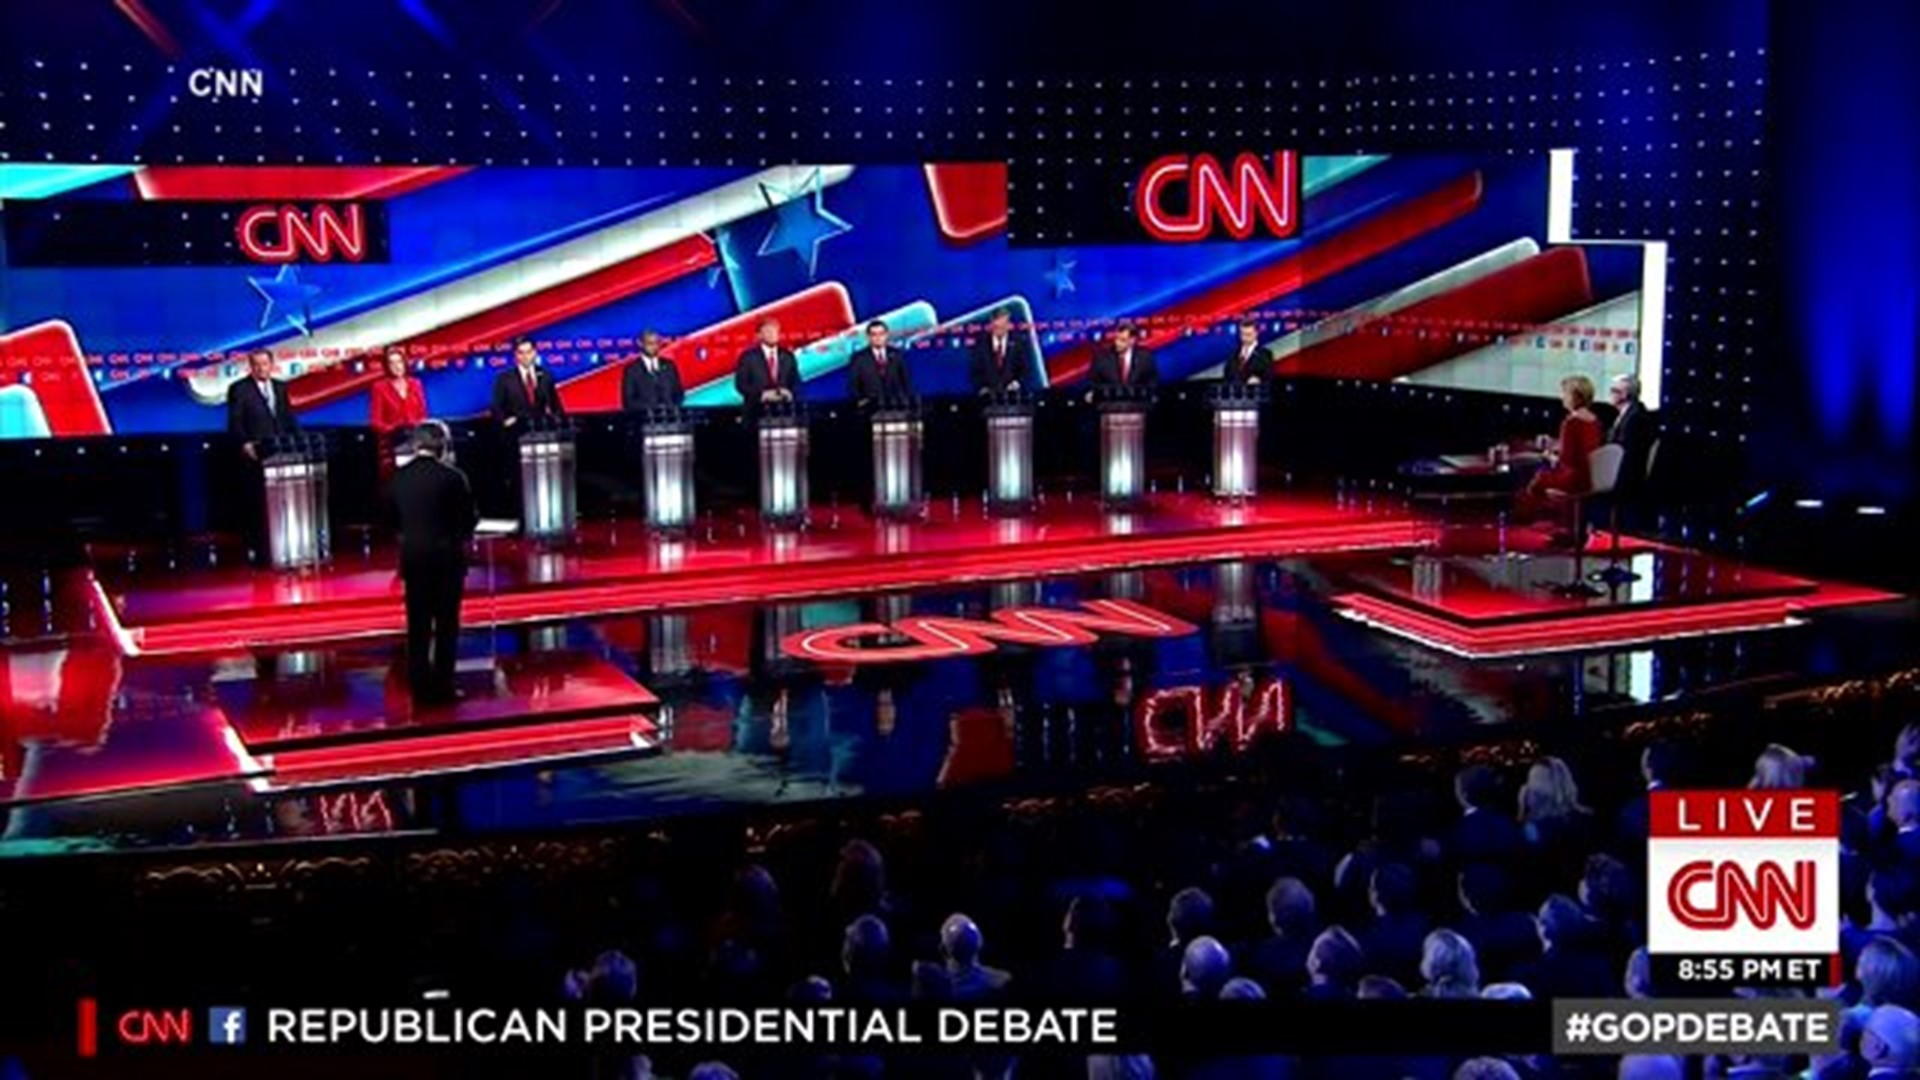 Fact Check: Last Republican Debate of 2015